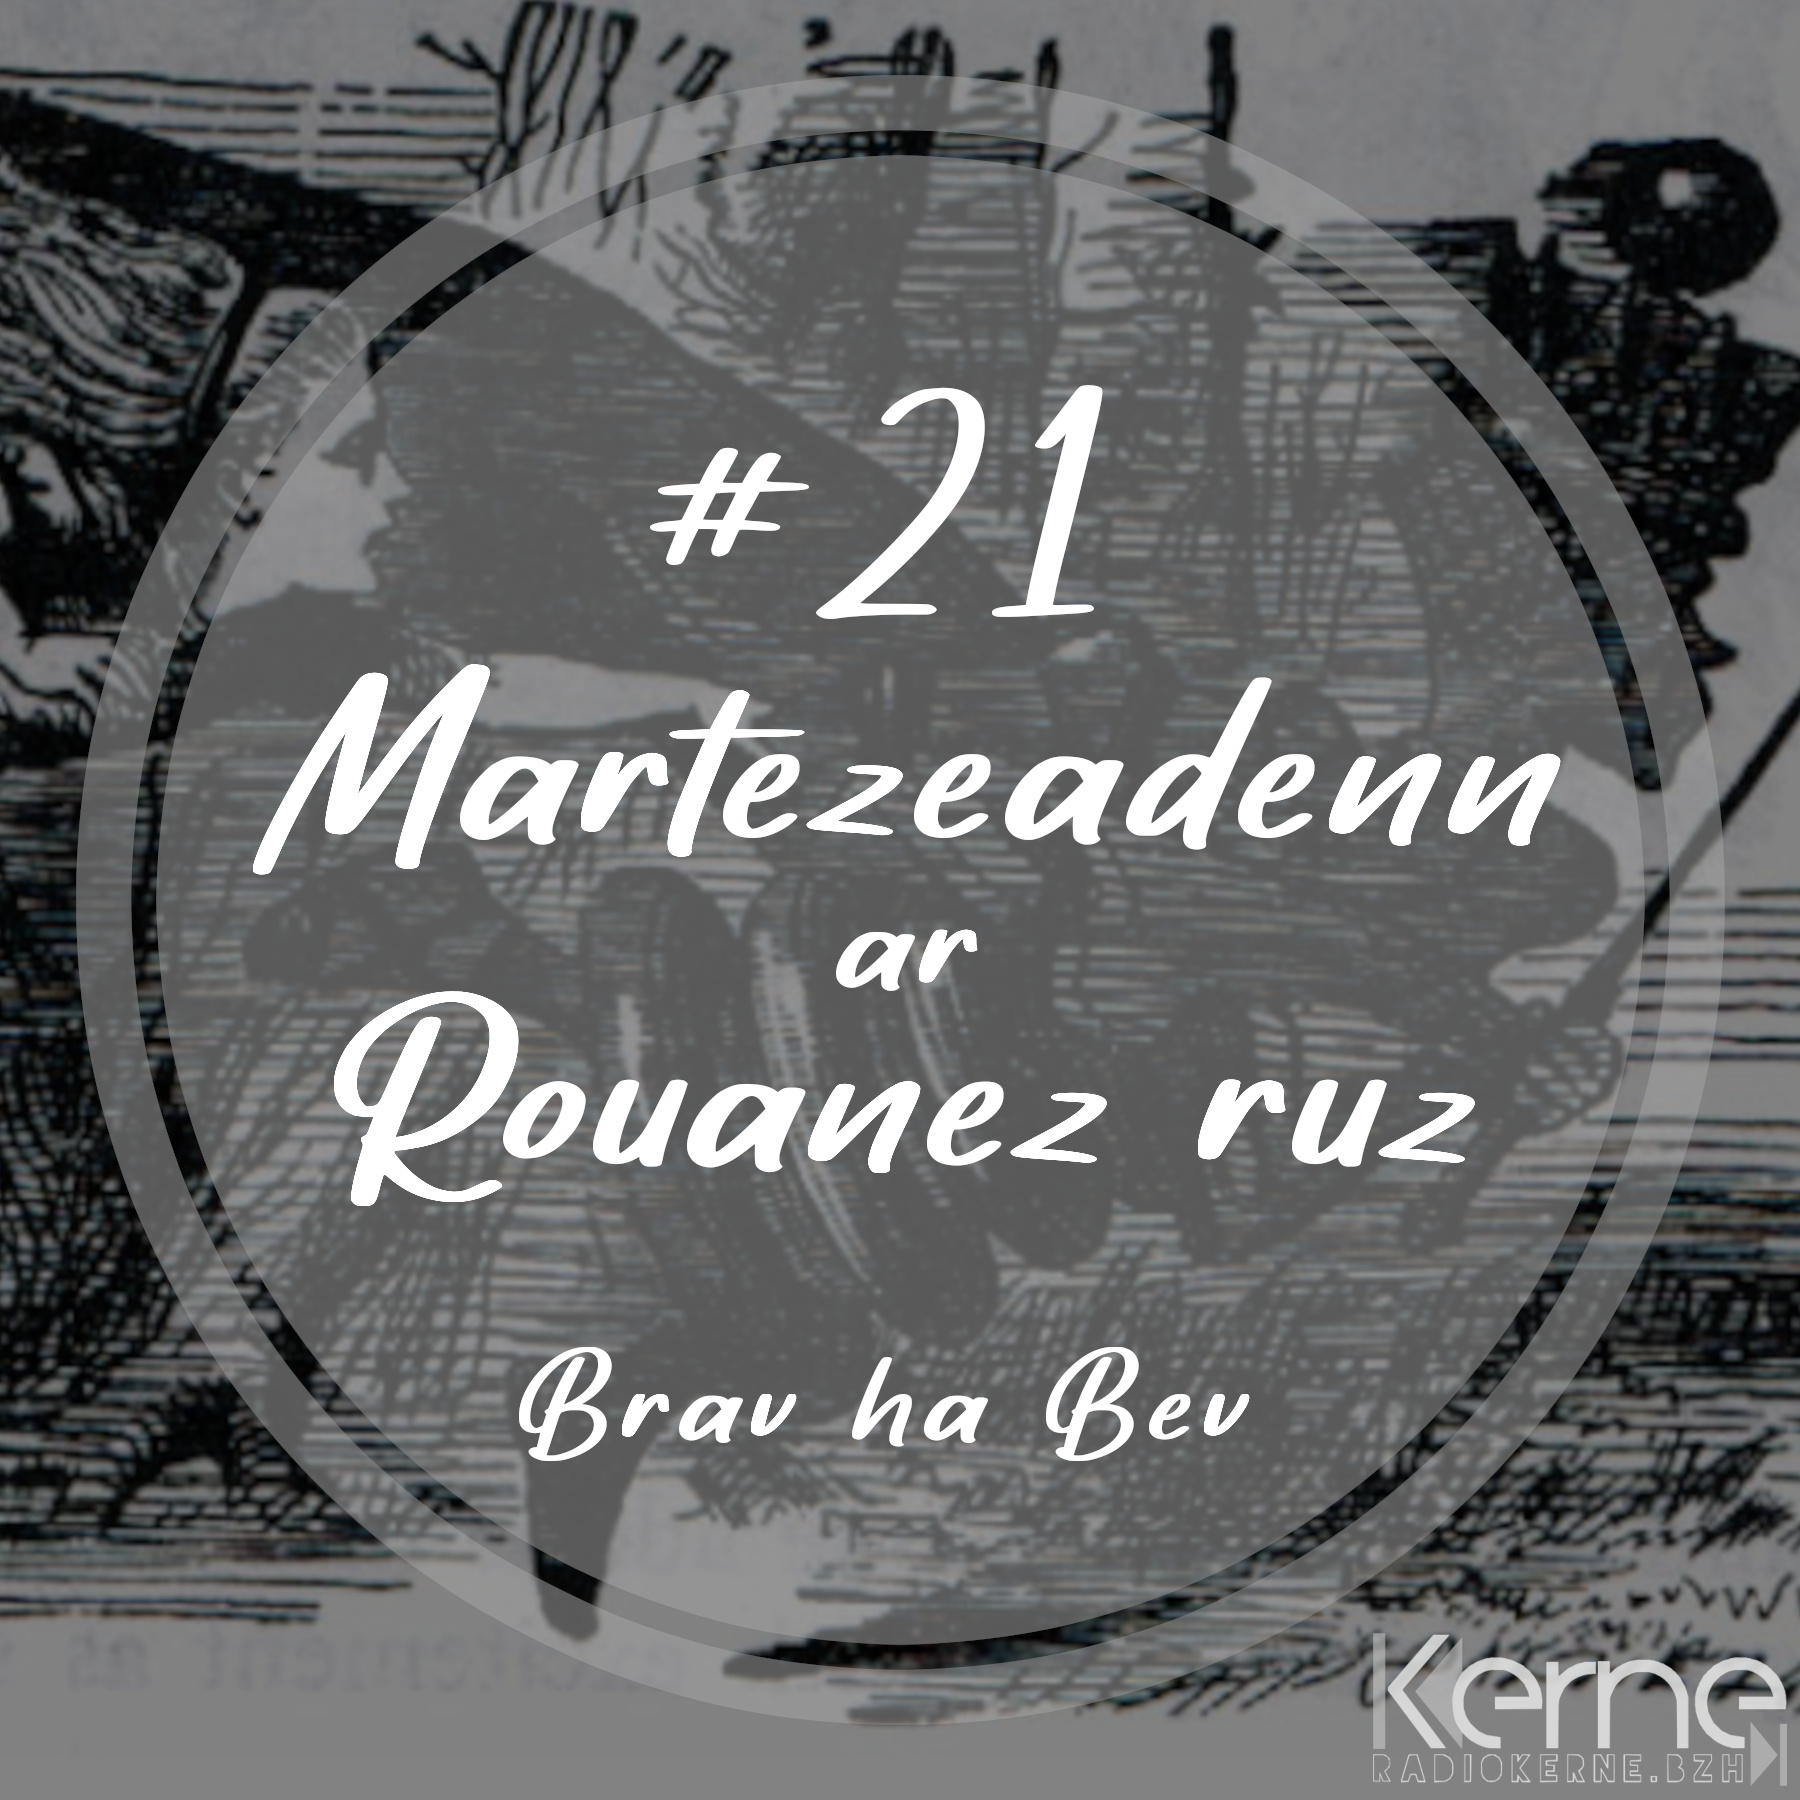 #21 Martezeadenn ar Rouanez ruz